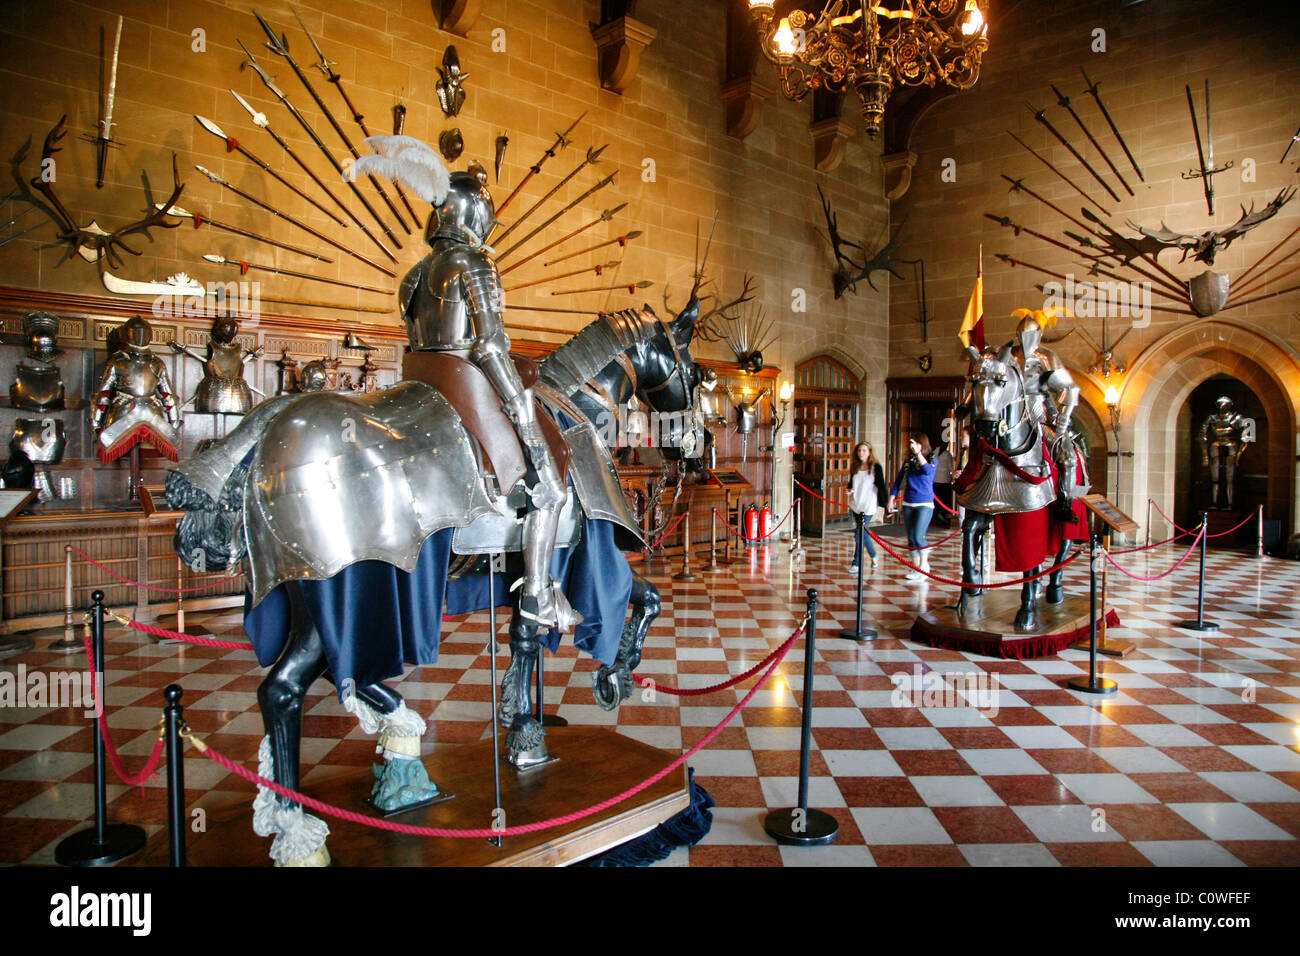 The Great Hall, Warwick Castle, England, UK. Stock Photo